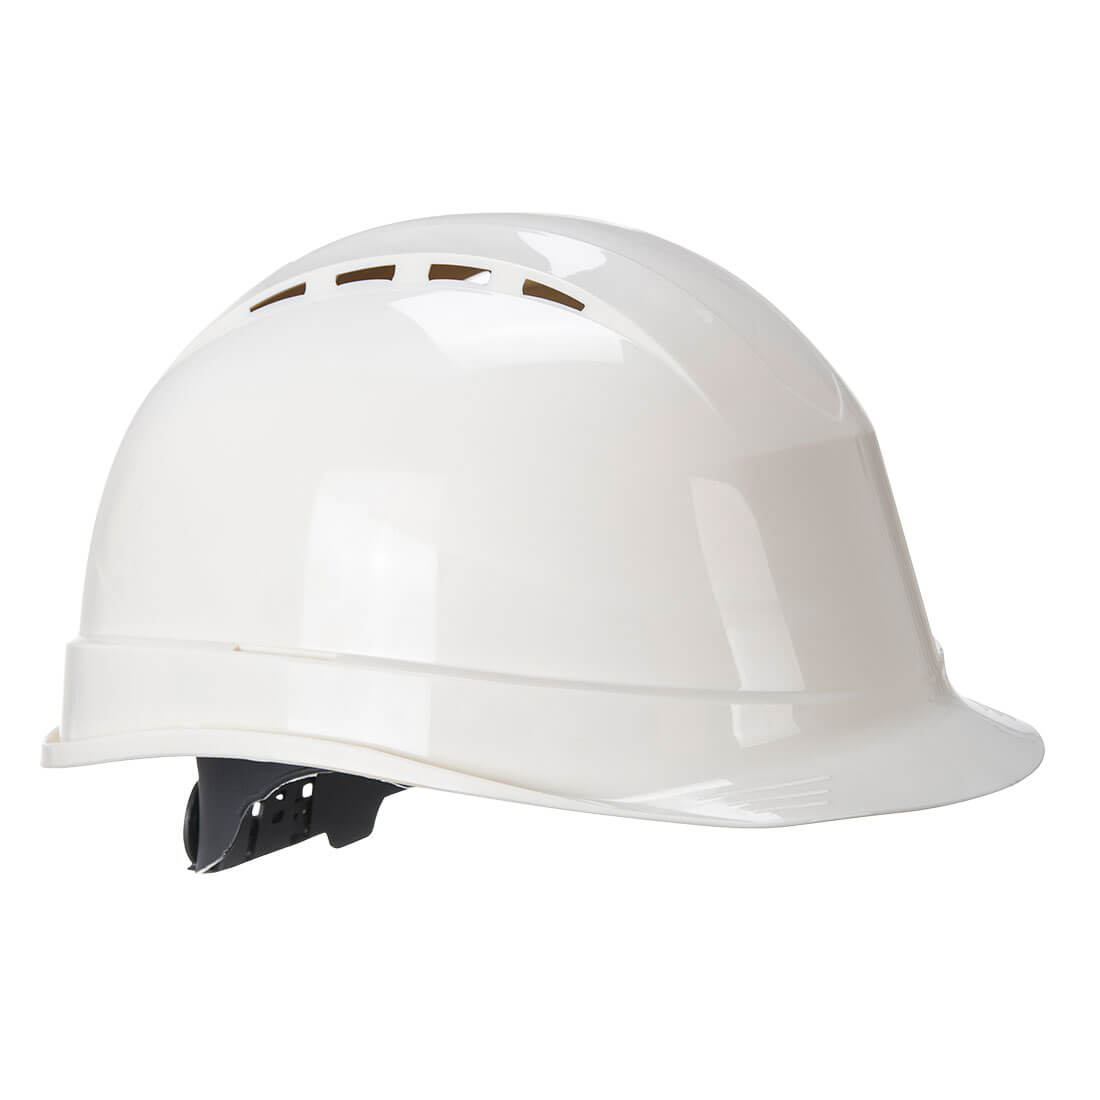 Arrow Safety Helmet   - White